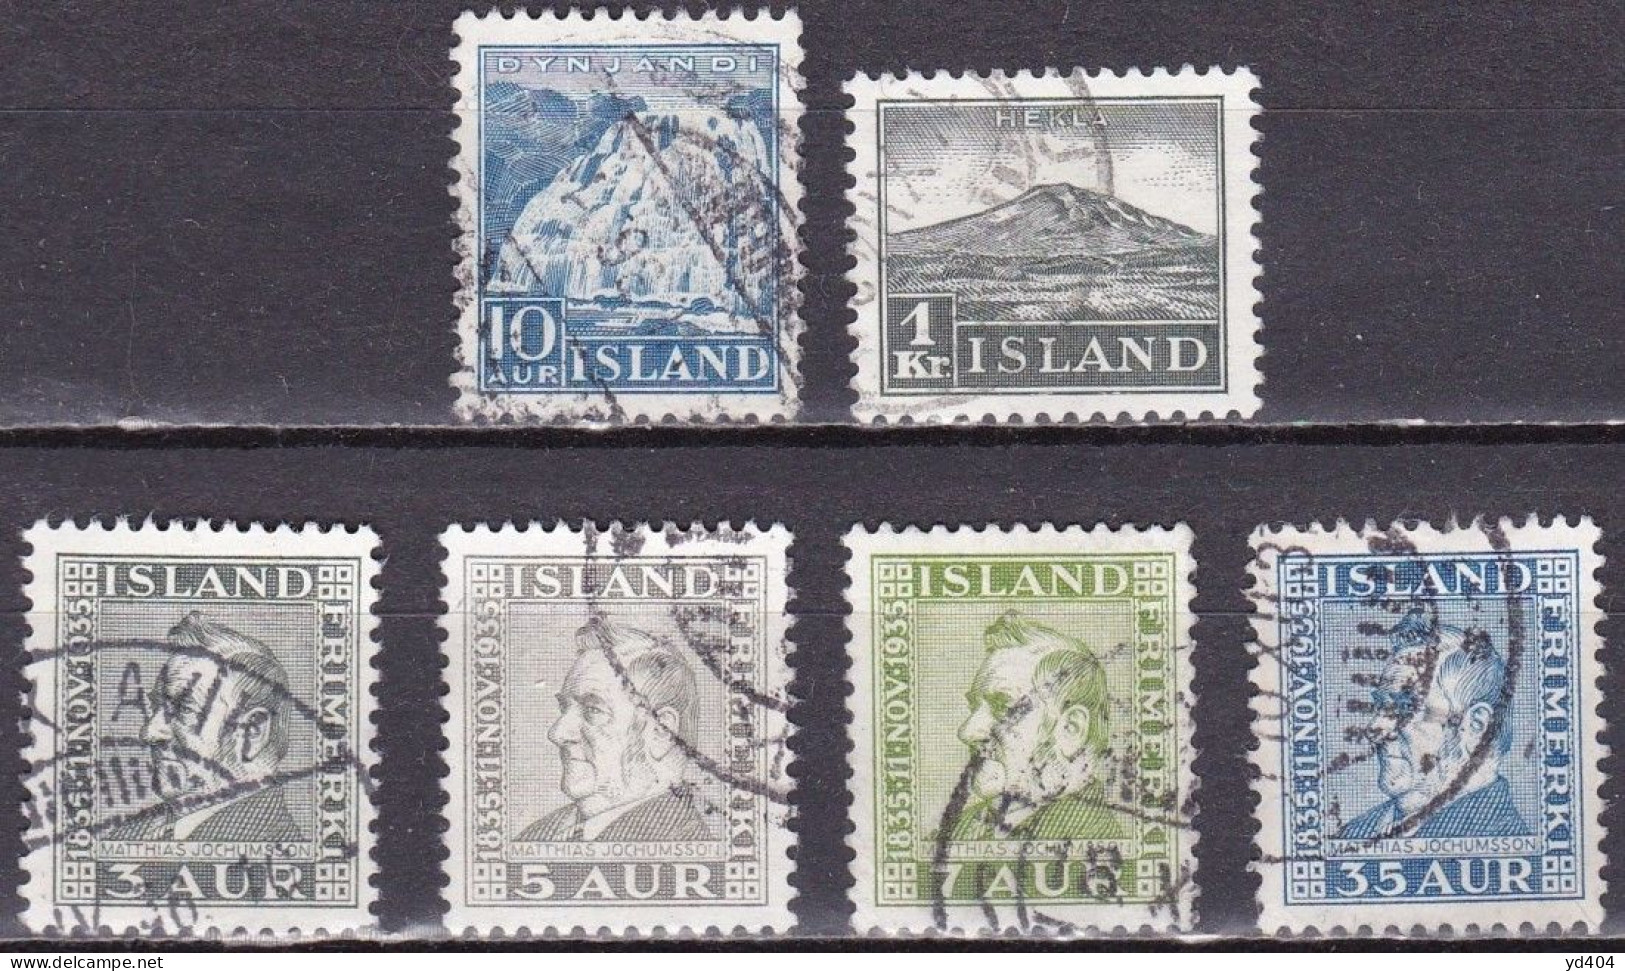 IS032 – ISLANDE – ICELAND – 1935 – FULL YEAR SET – SG # 214/9 USED 11 € - Usados